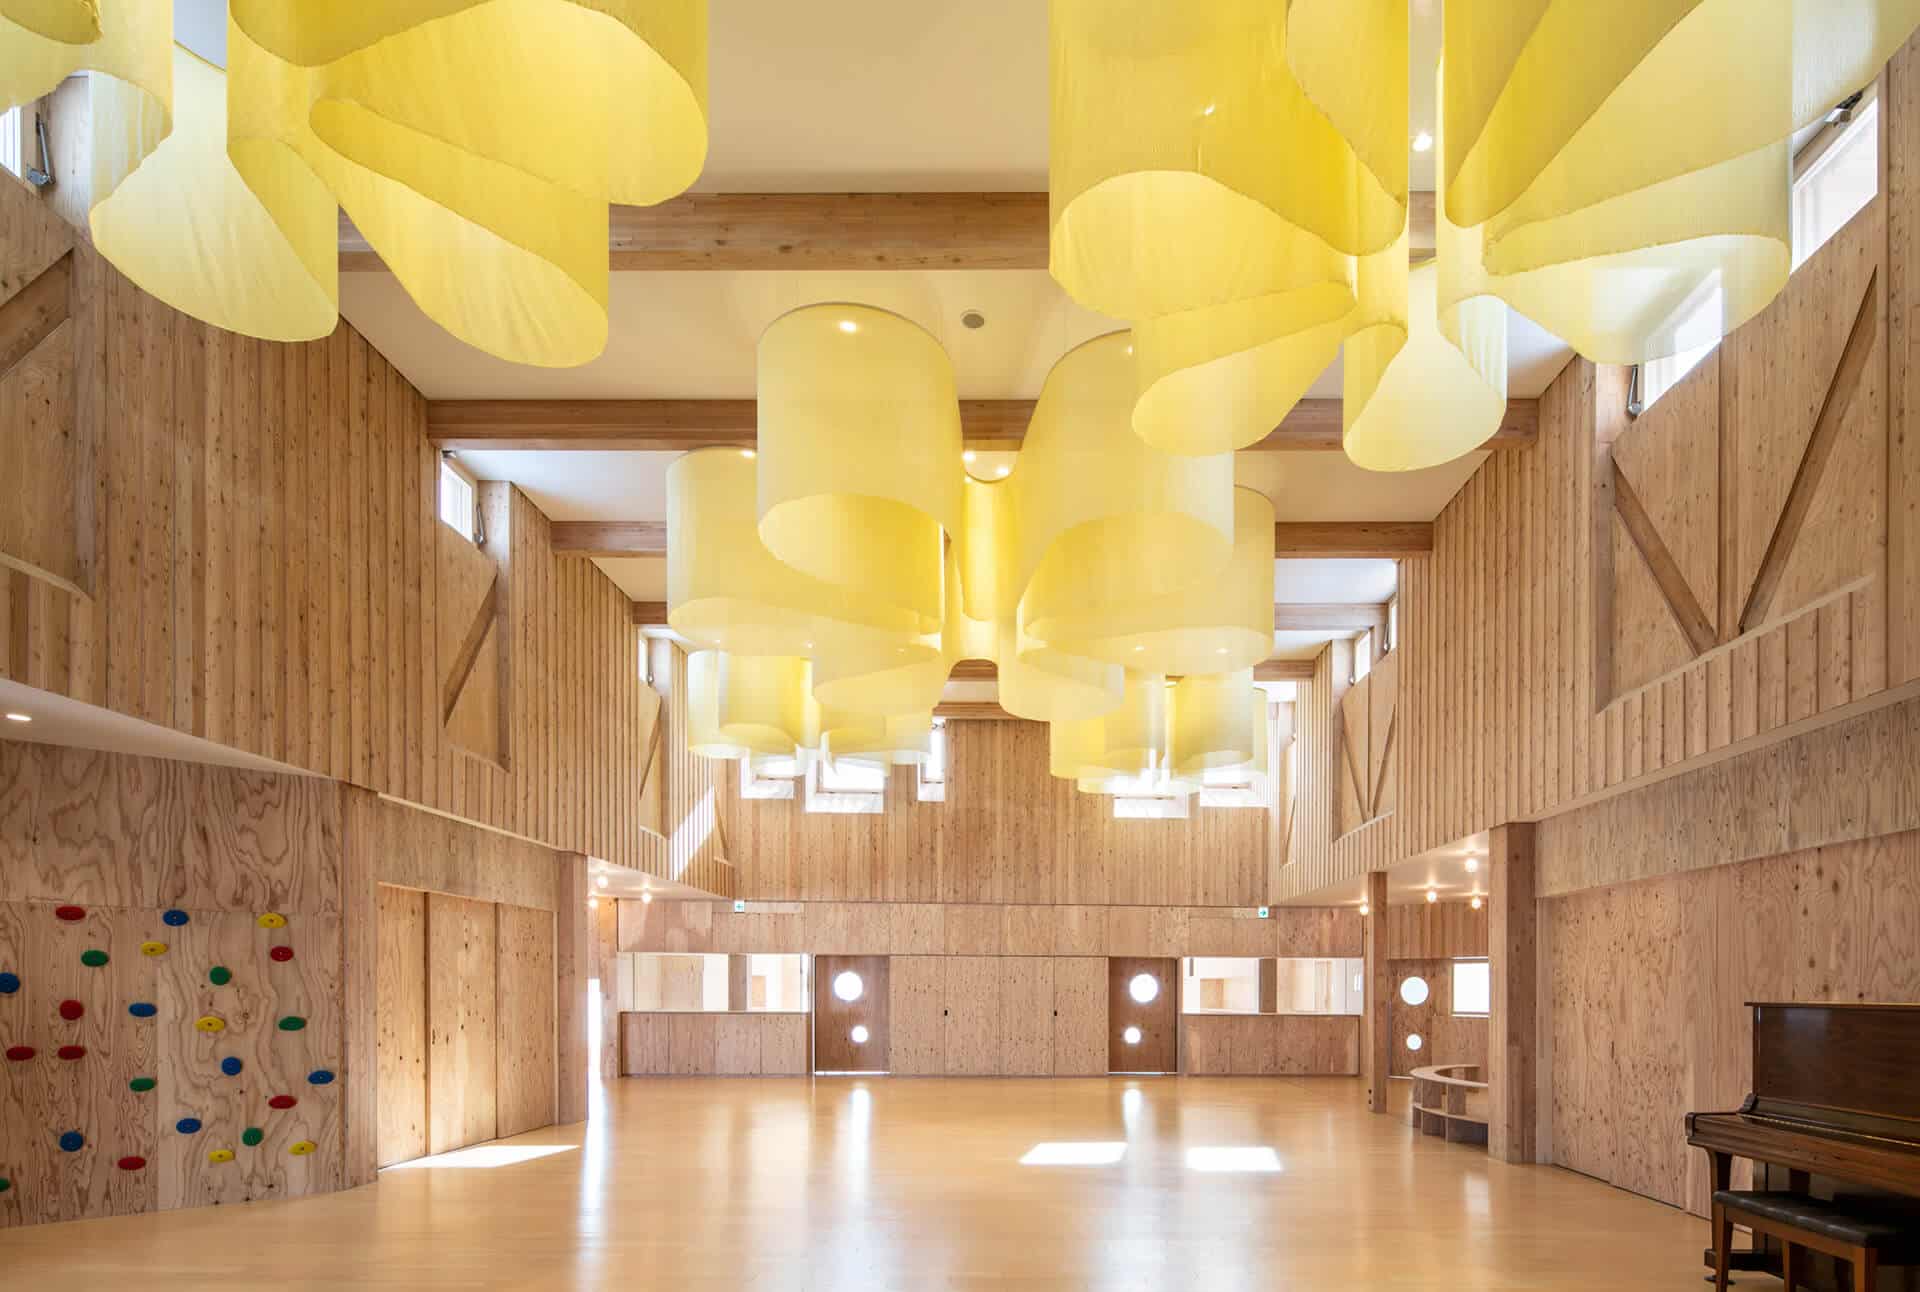 Kengo Kuma’s wooden nursery school in Japan uses sunflower-inspired biomimicry